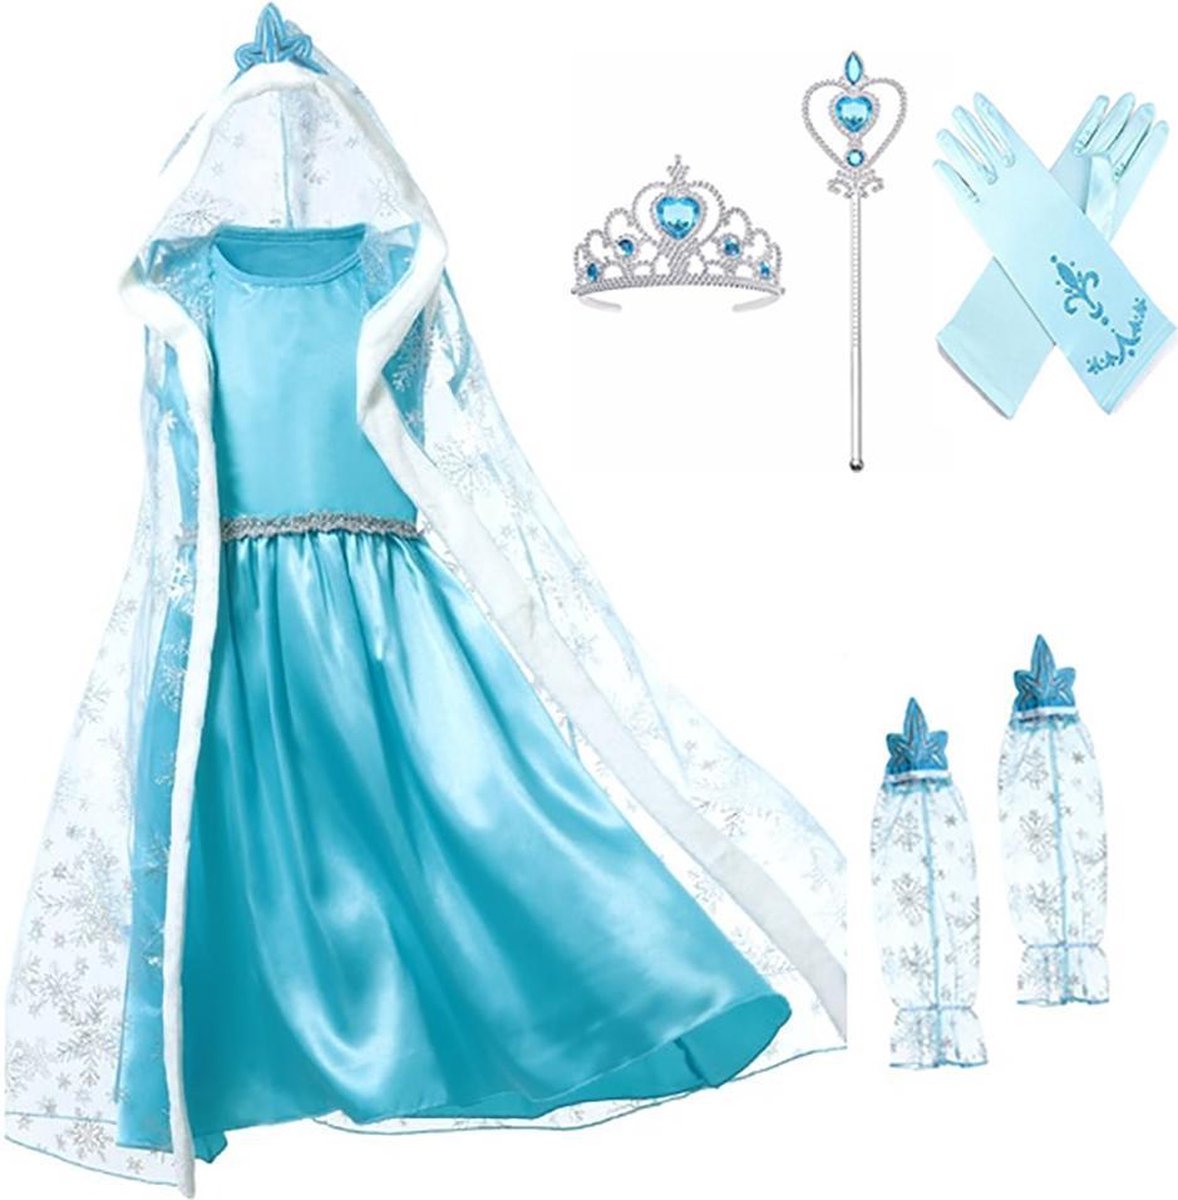 Het Betere Merk - Prinsessenjurk meisje - Blauwe jurk - maat 92/98 (100) - losse cape + mouwen - Tiara - Toverstaf prinses - Handschoenen - Carnavalskleding meisje - Verkleedkleren Kind - Cadeau meisje - Verjaardag - Prinsessen speelgoed